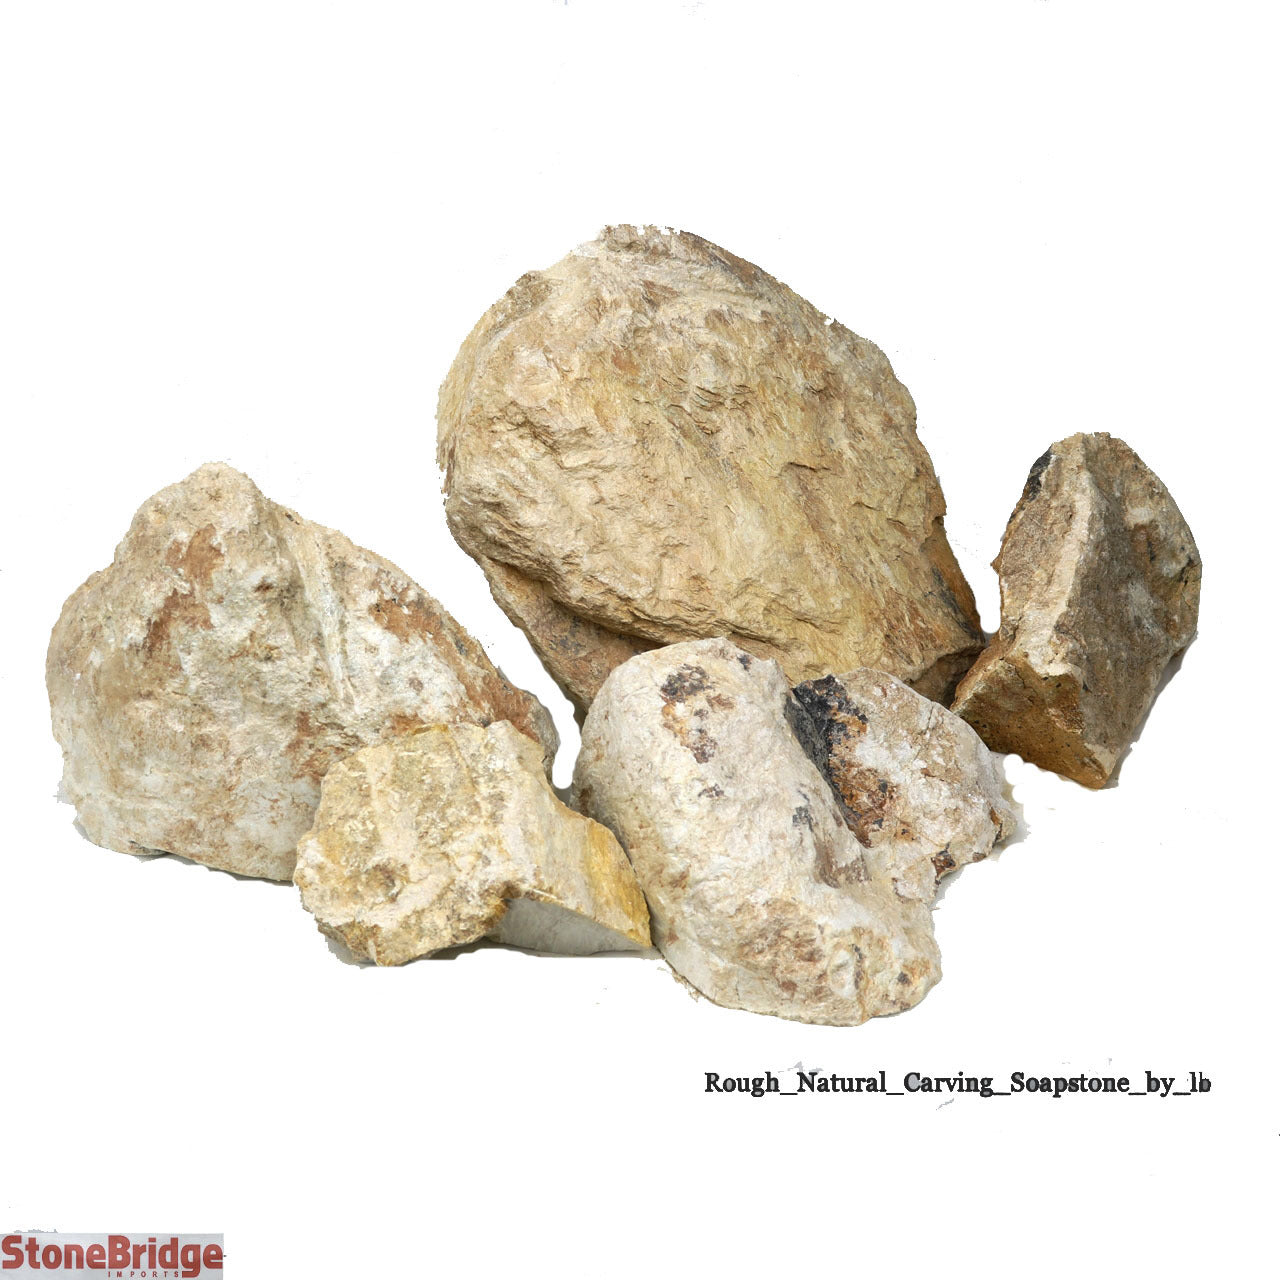 Soapstone Blocks 3x3x5 @ Stonebridge Imports – The Rock Space